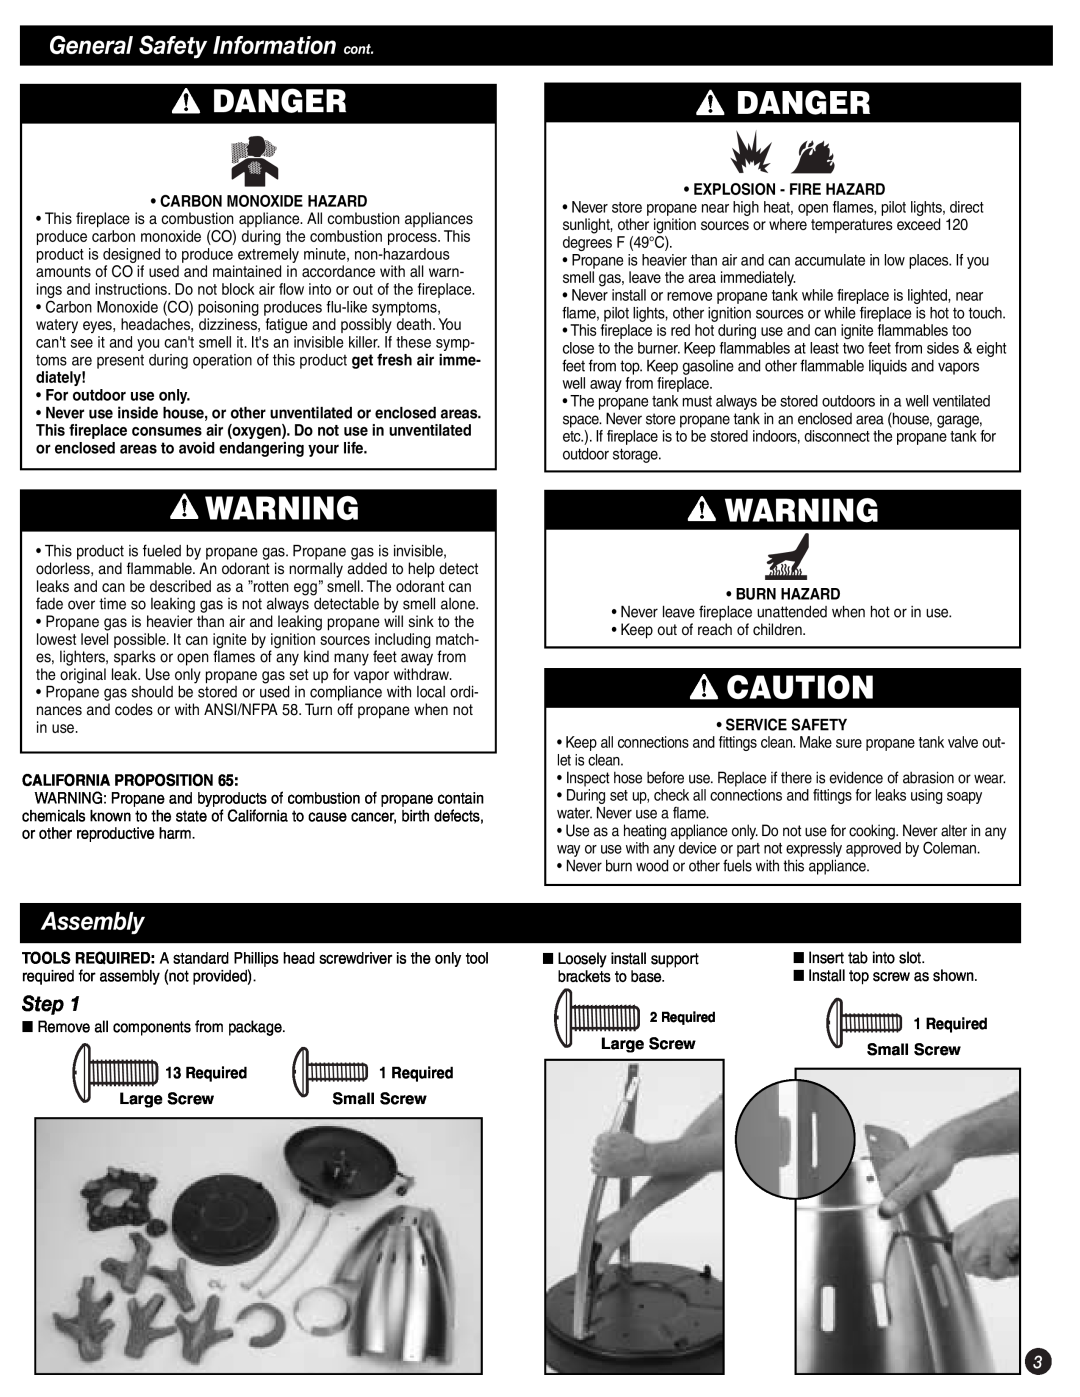 Coleman 5076 manual Assembly, Step, Danger, General Safety Information cont 